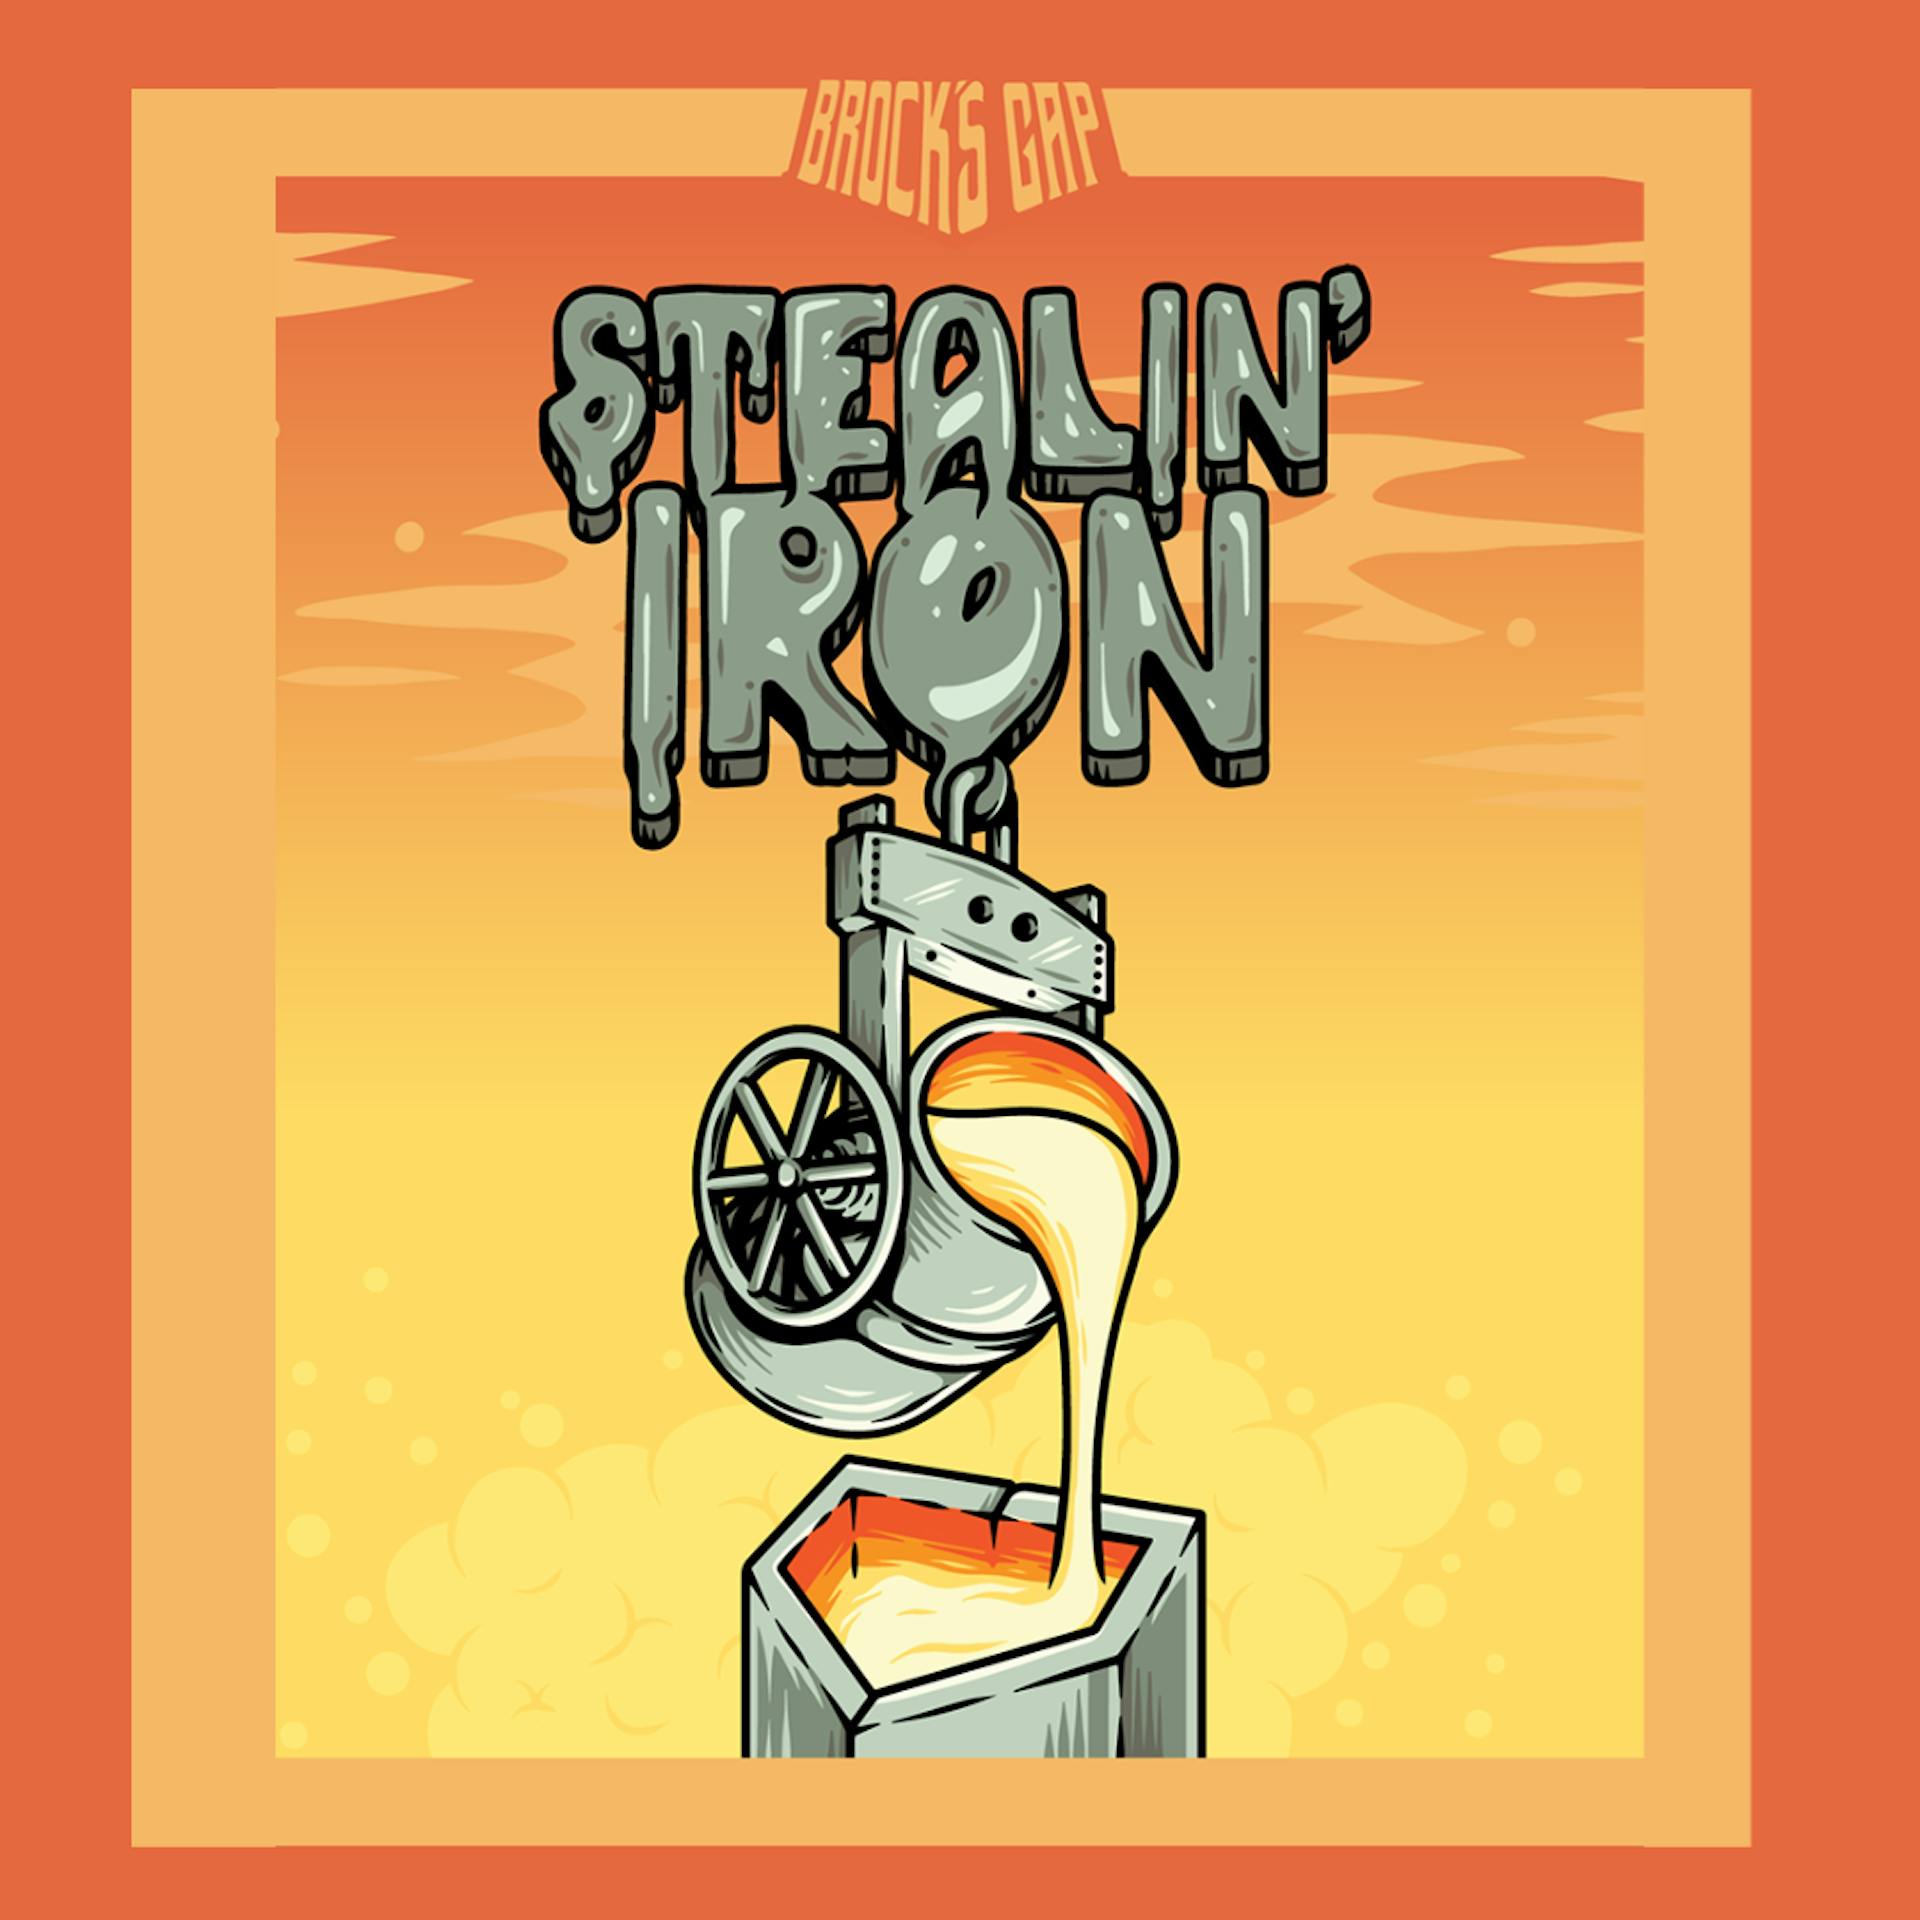 Stealin’ Iron Oktoberfest